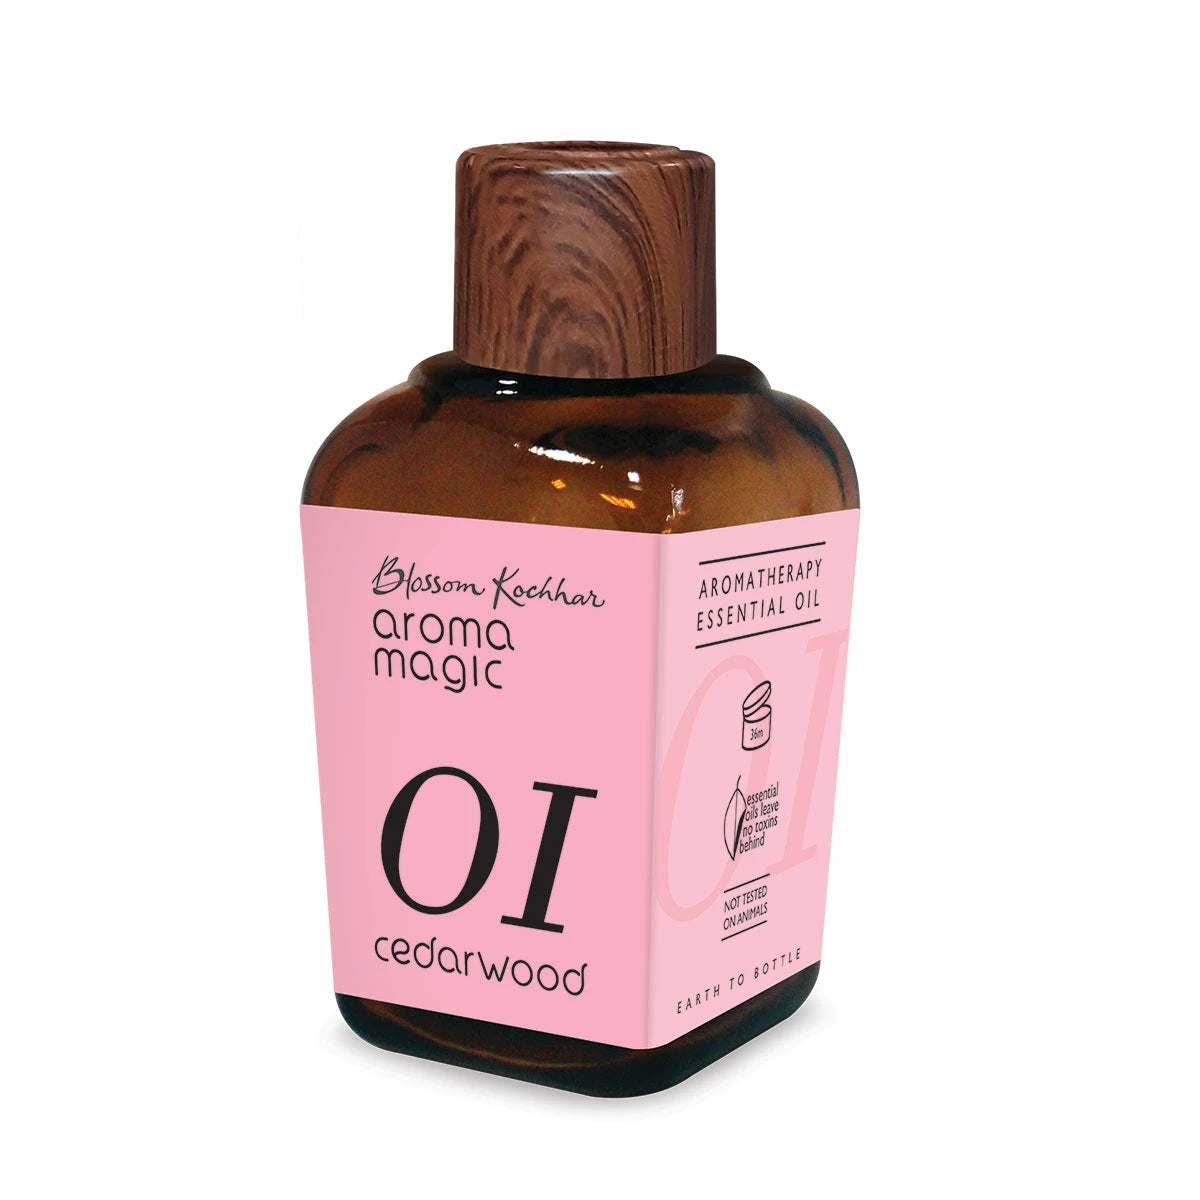 Aroma magic Cedarwood oil